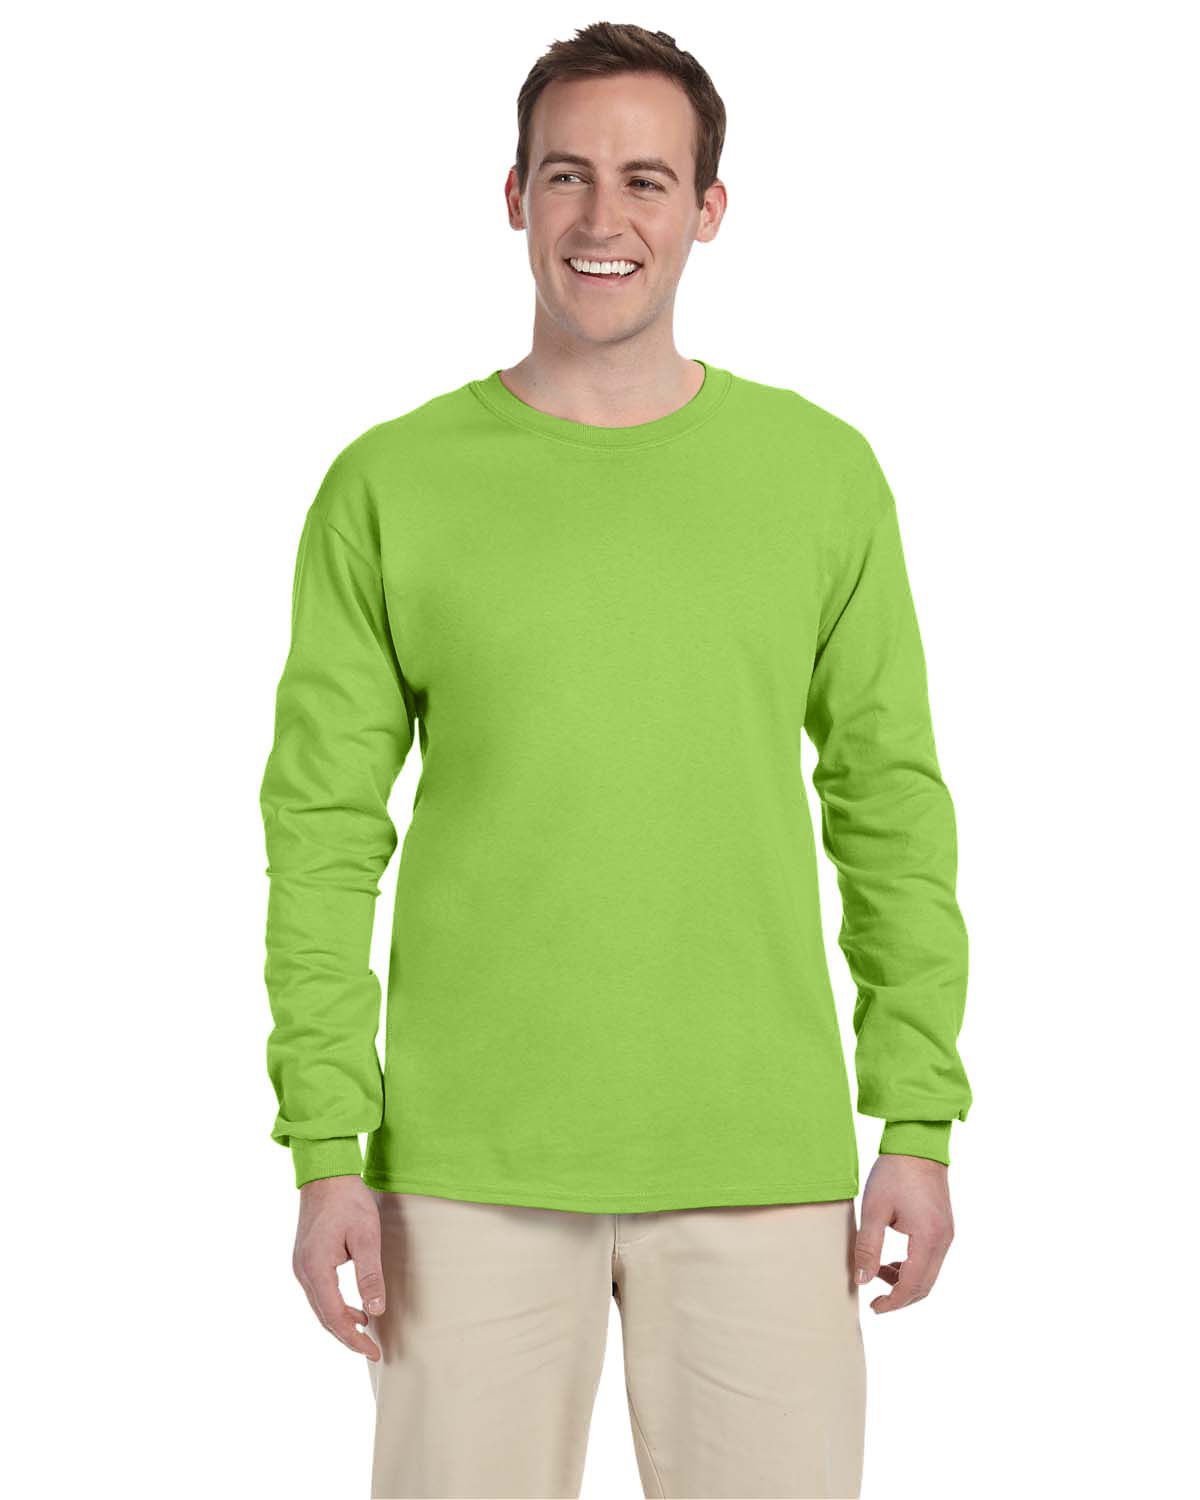 No Boundaries Custom Design Men/Unisex Crew Neck Tee Shirts - Brand New !  Storm Blue/Olive Green